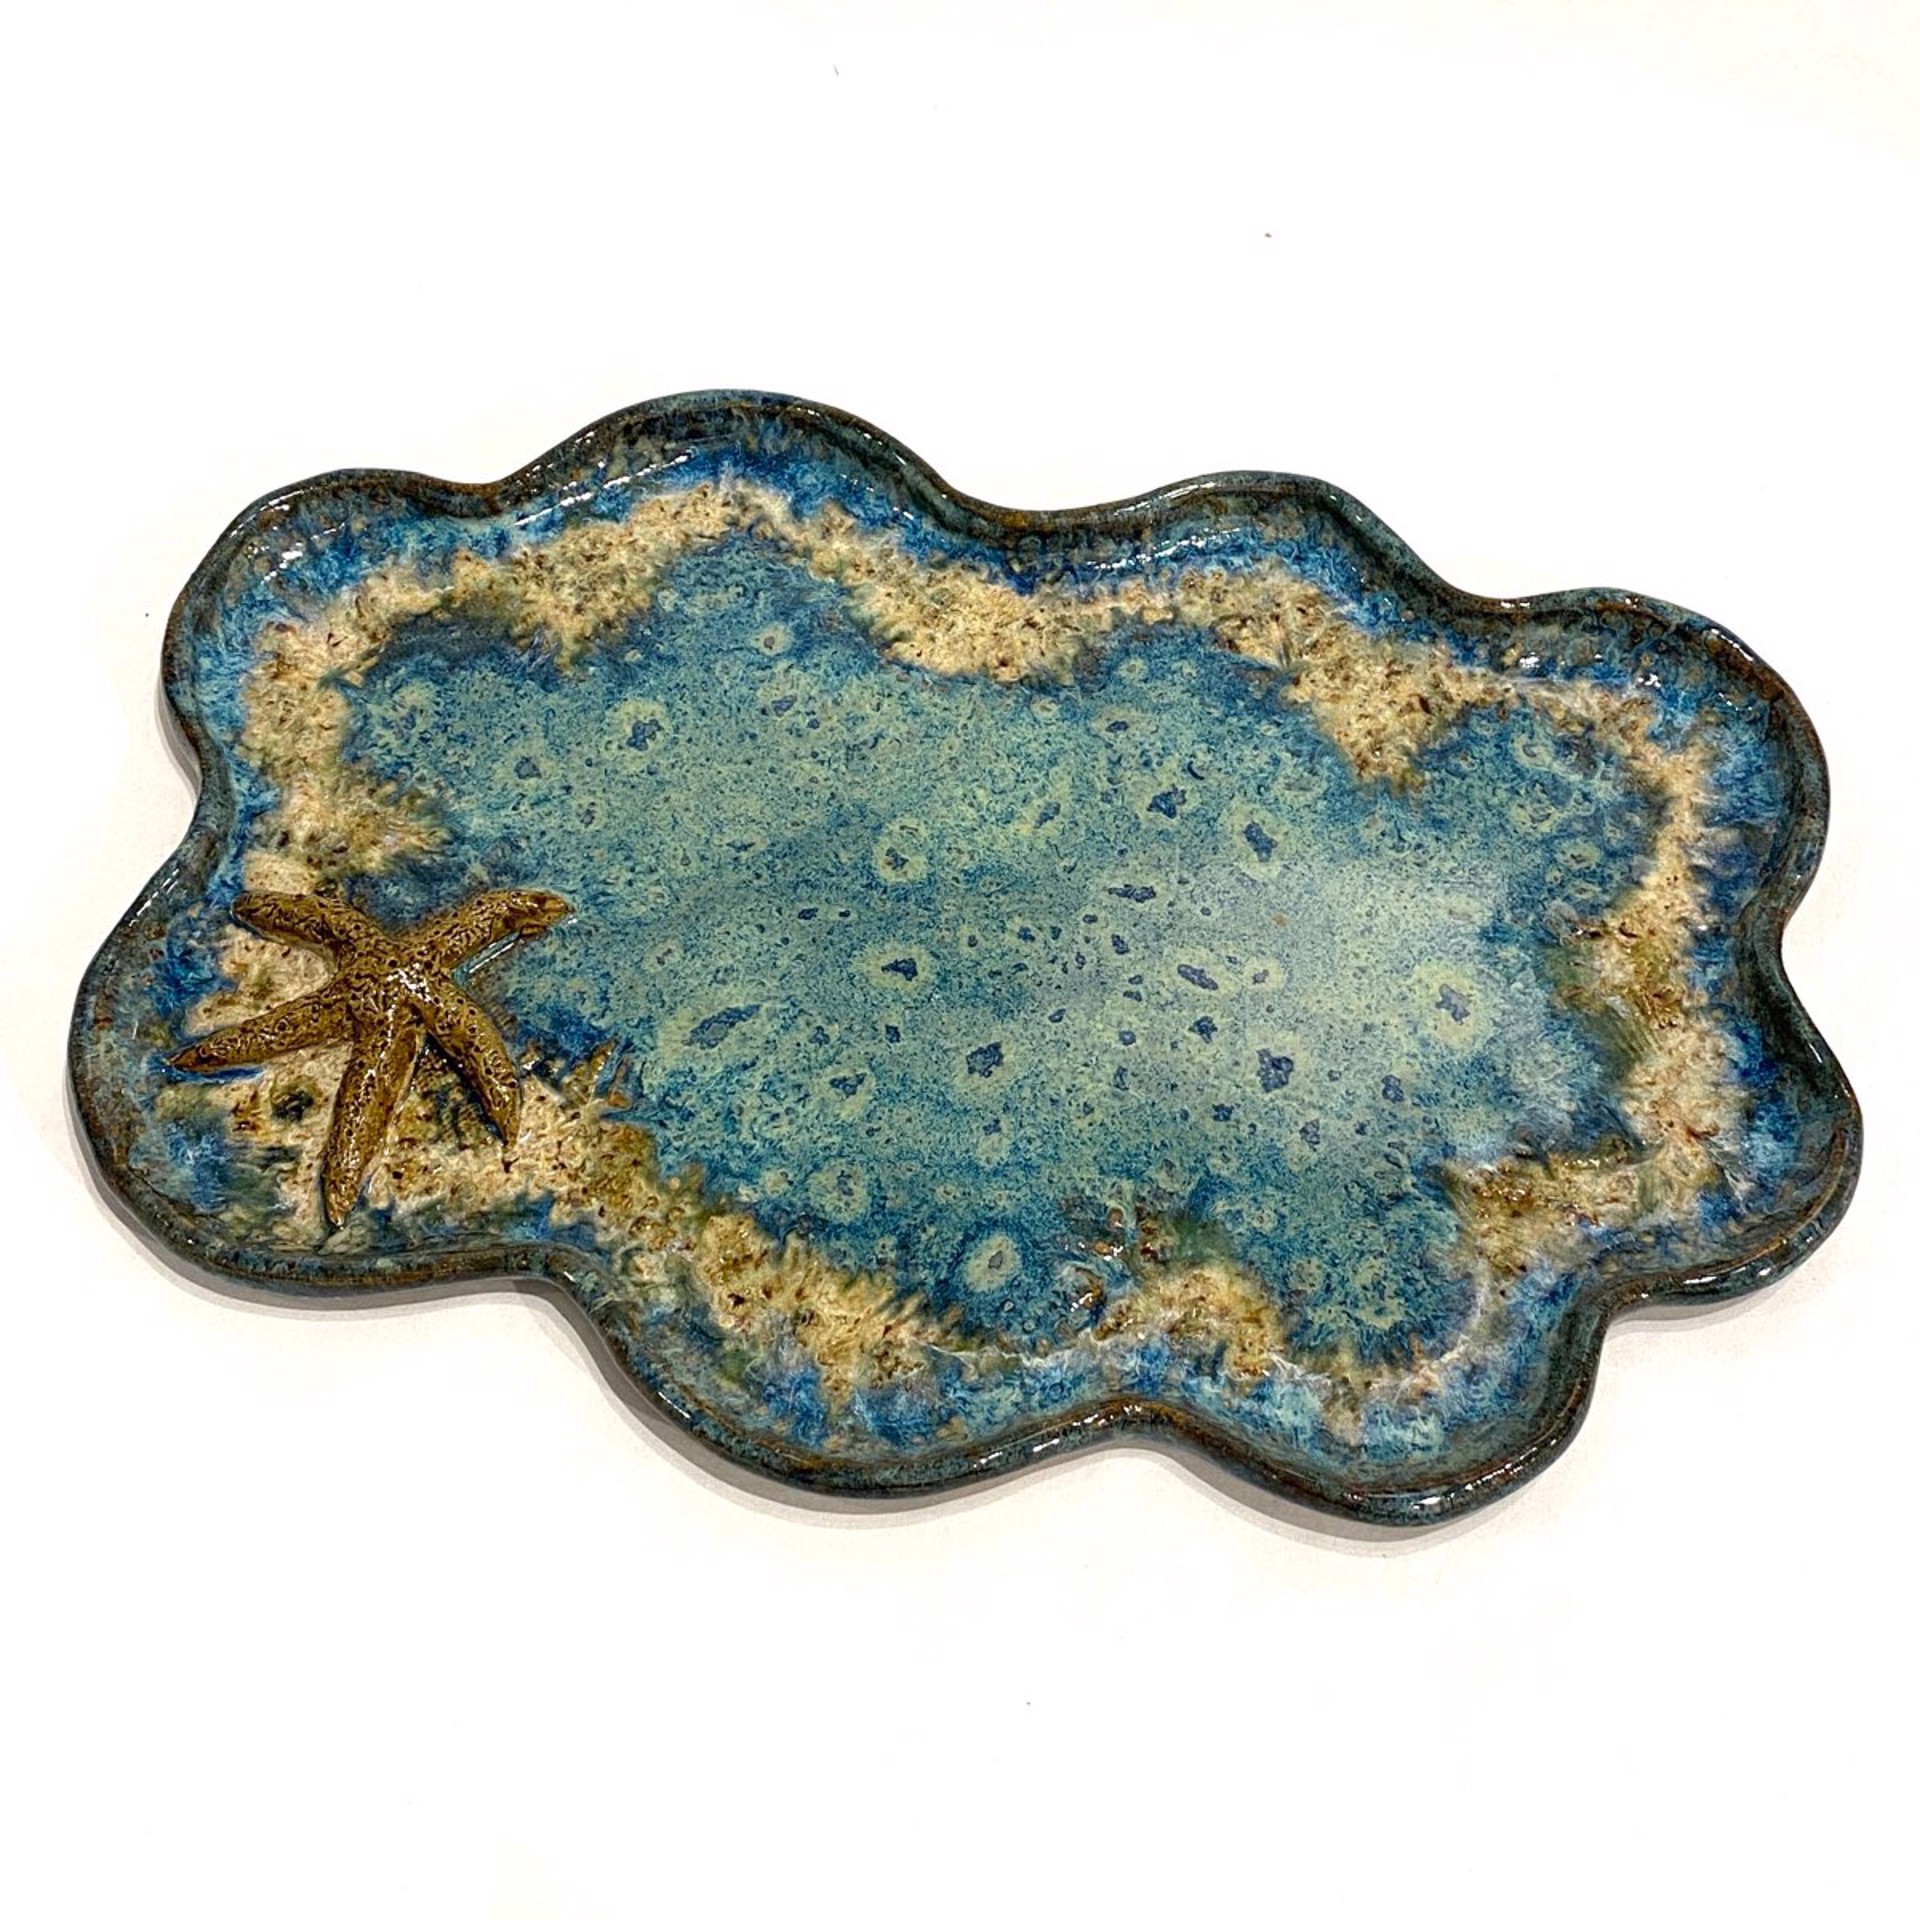 LG23-1004 Plate with Starfish (Blue Glaze) by Jim & Steffi Logan